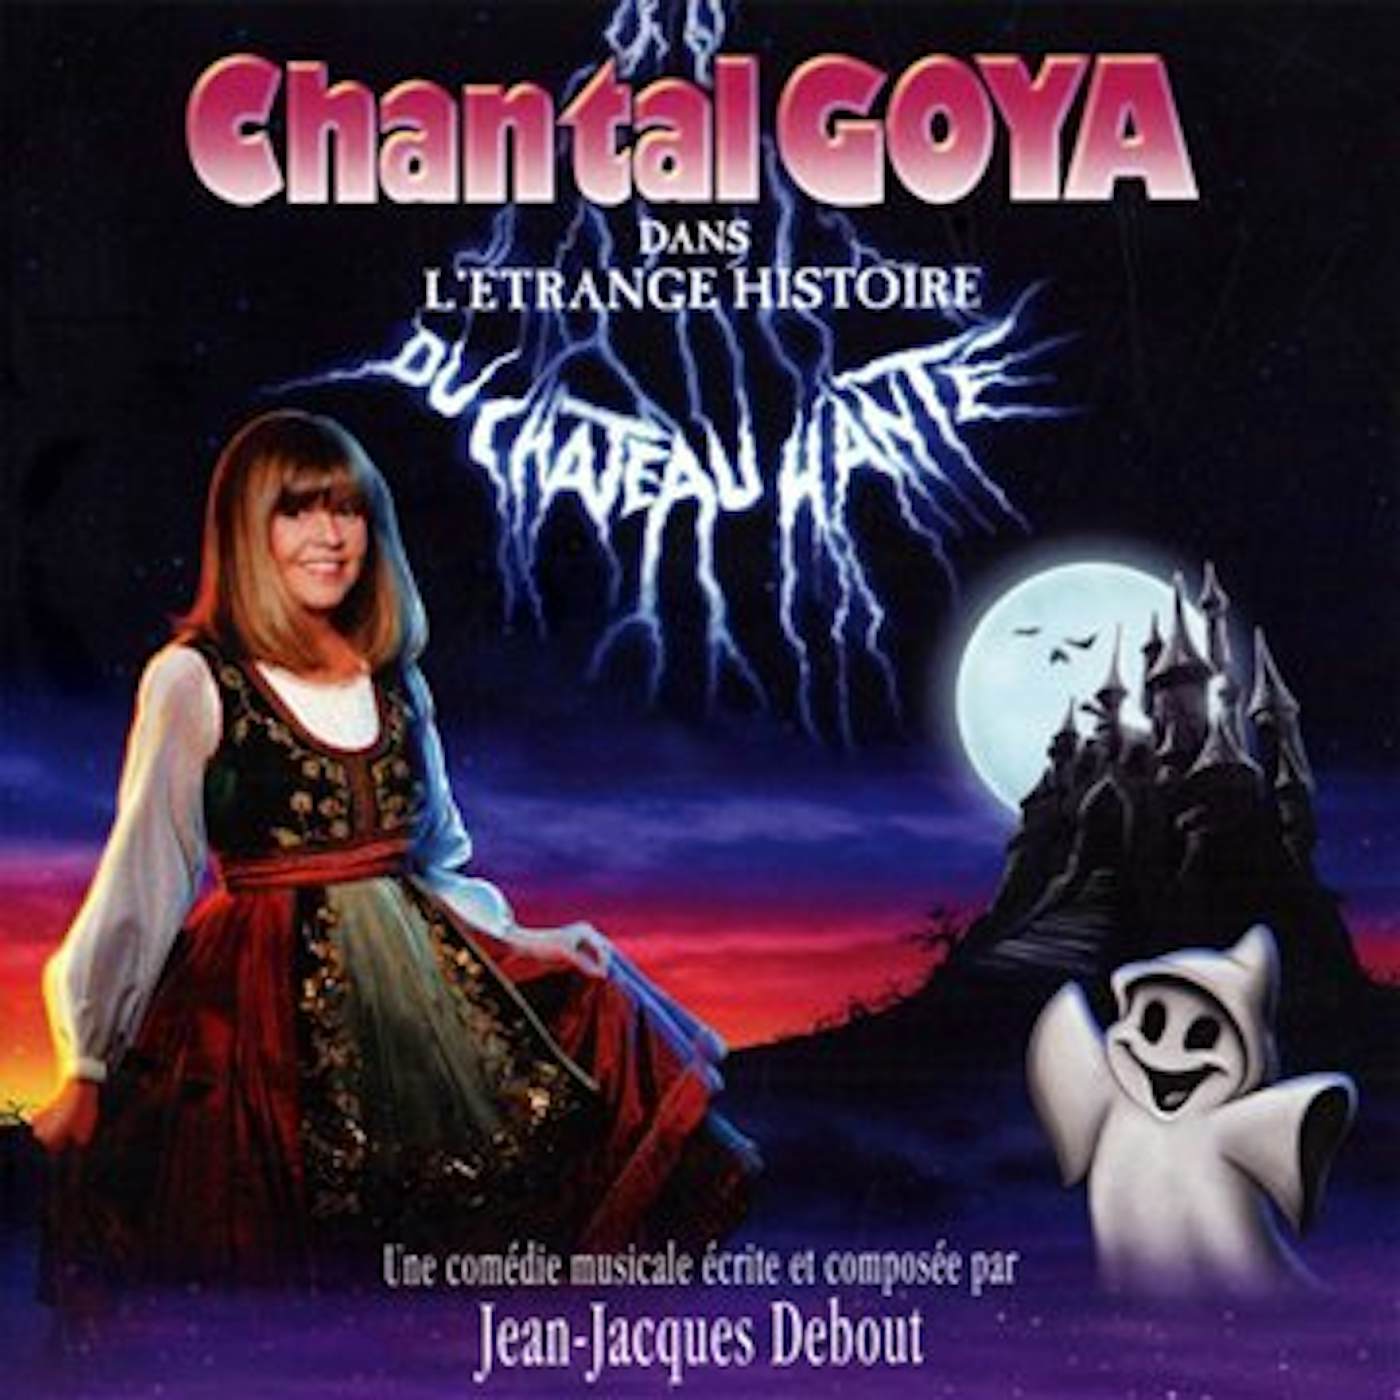 Chantal Goya L'ETRANGE HISTOIRE DU CHATEAU HANTE CD